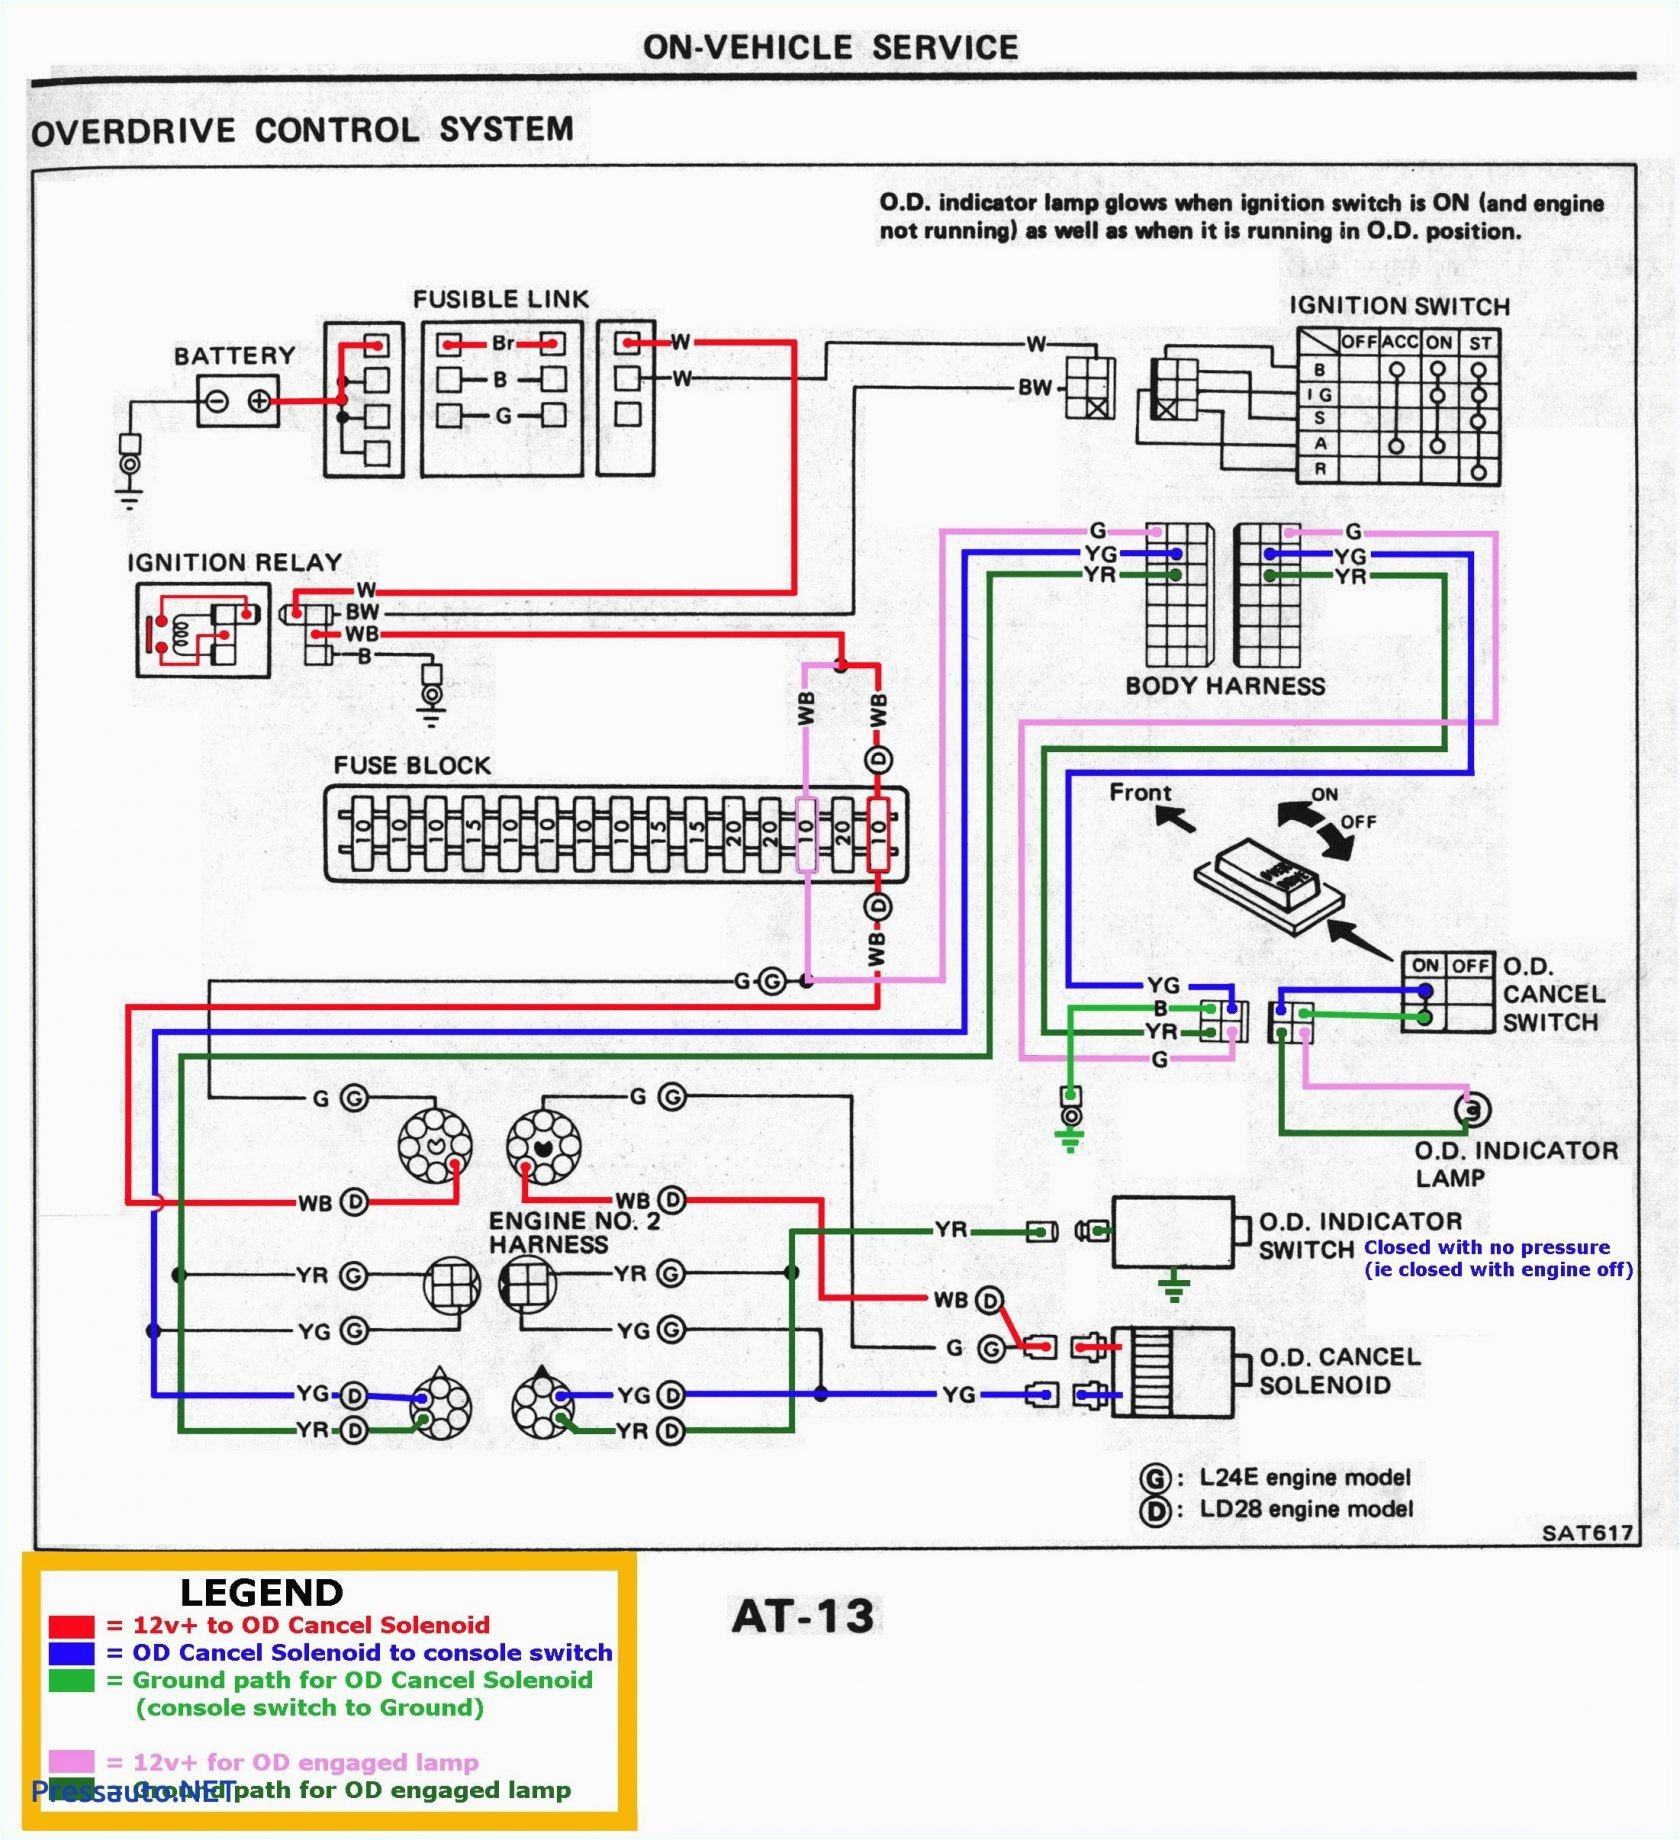 stereo wiring diagrams manual e book free car stereo wiring diagrams free jvc wiring diagram